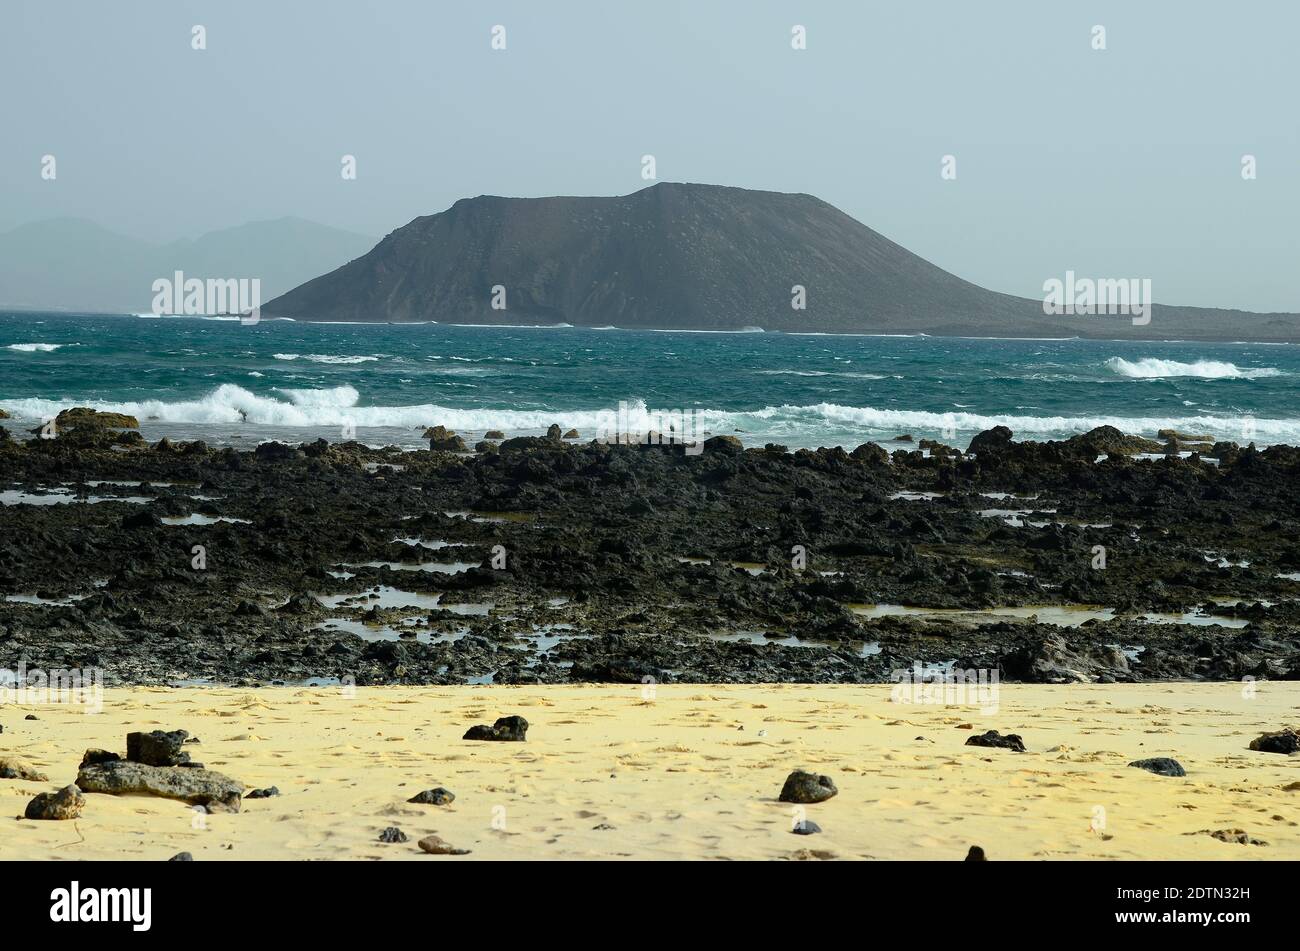 Spain, Canary Island, Fuerteventura, rocky coast with Los Lobos island behind Stock Photo